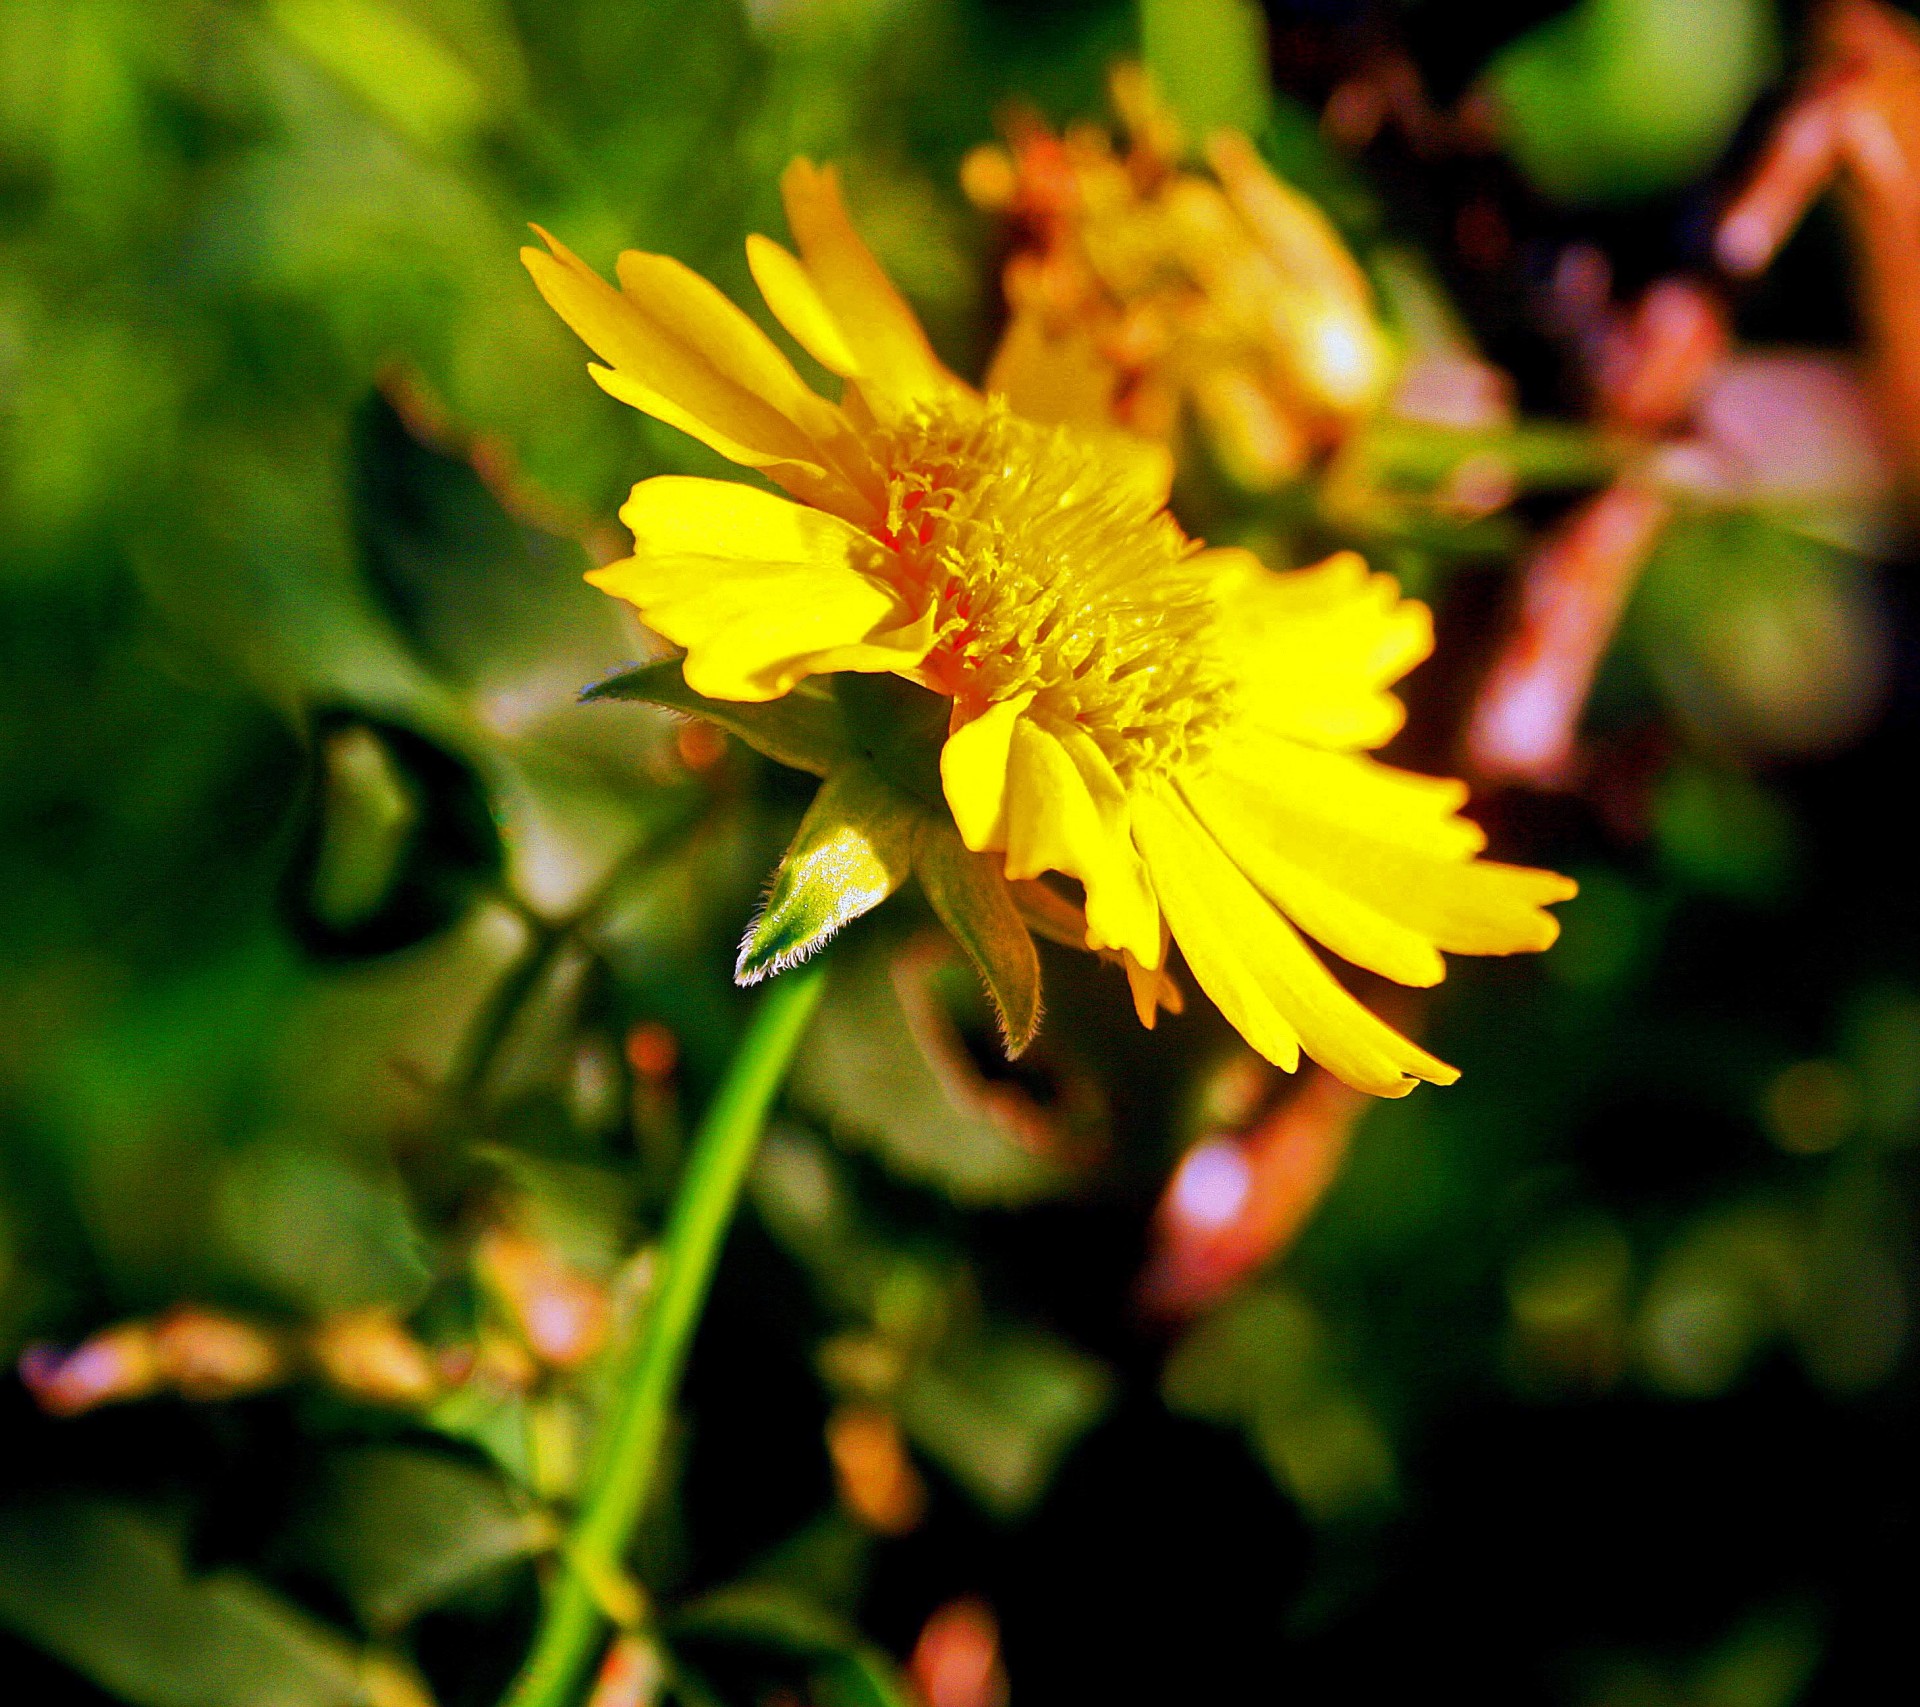 flower yellow daisy free photo